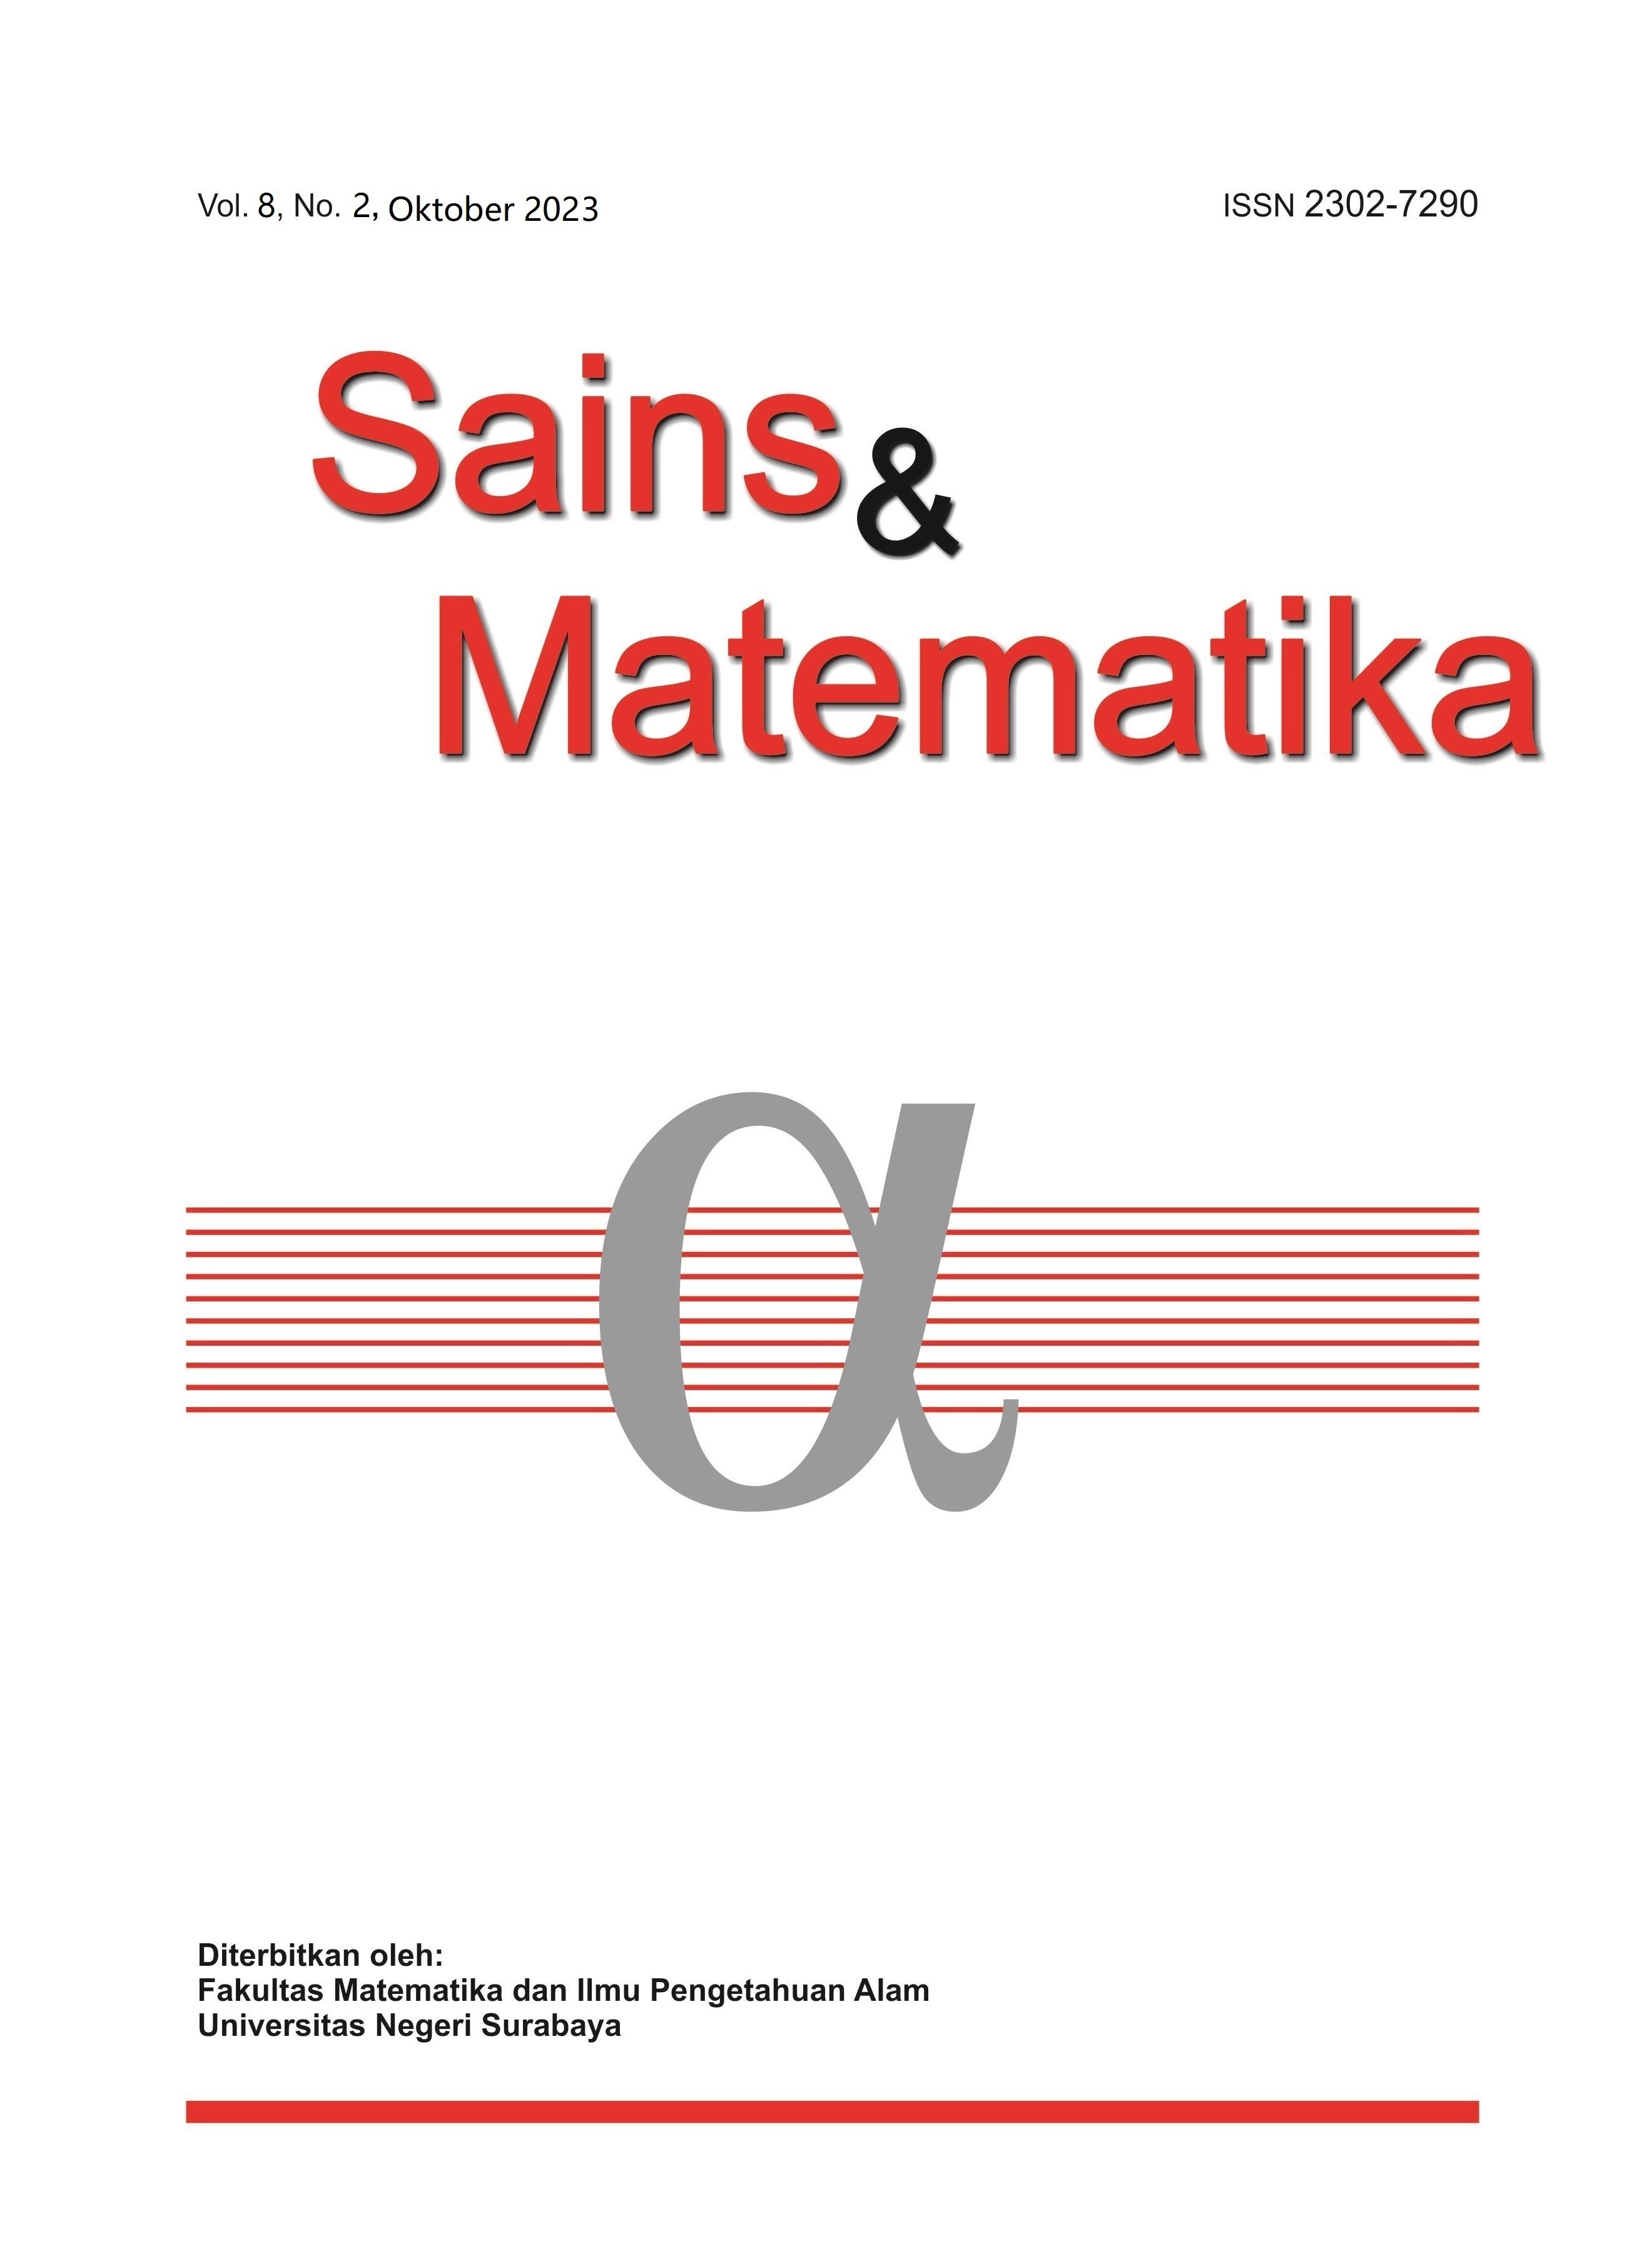 					View Vol. 8 No. 2 (2023): Oktober, Sains & Matematika
				